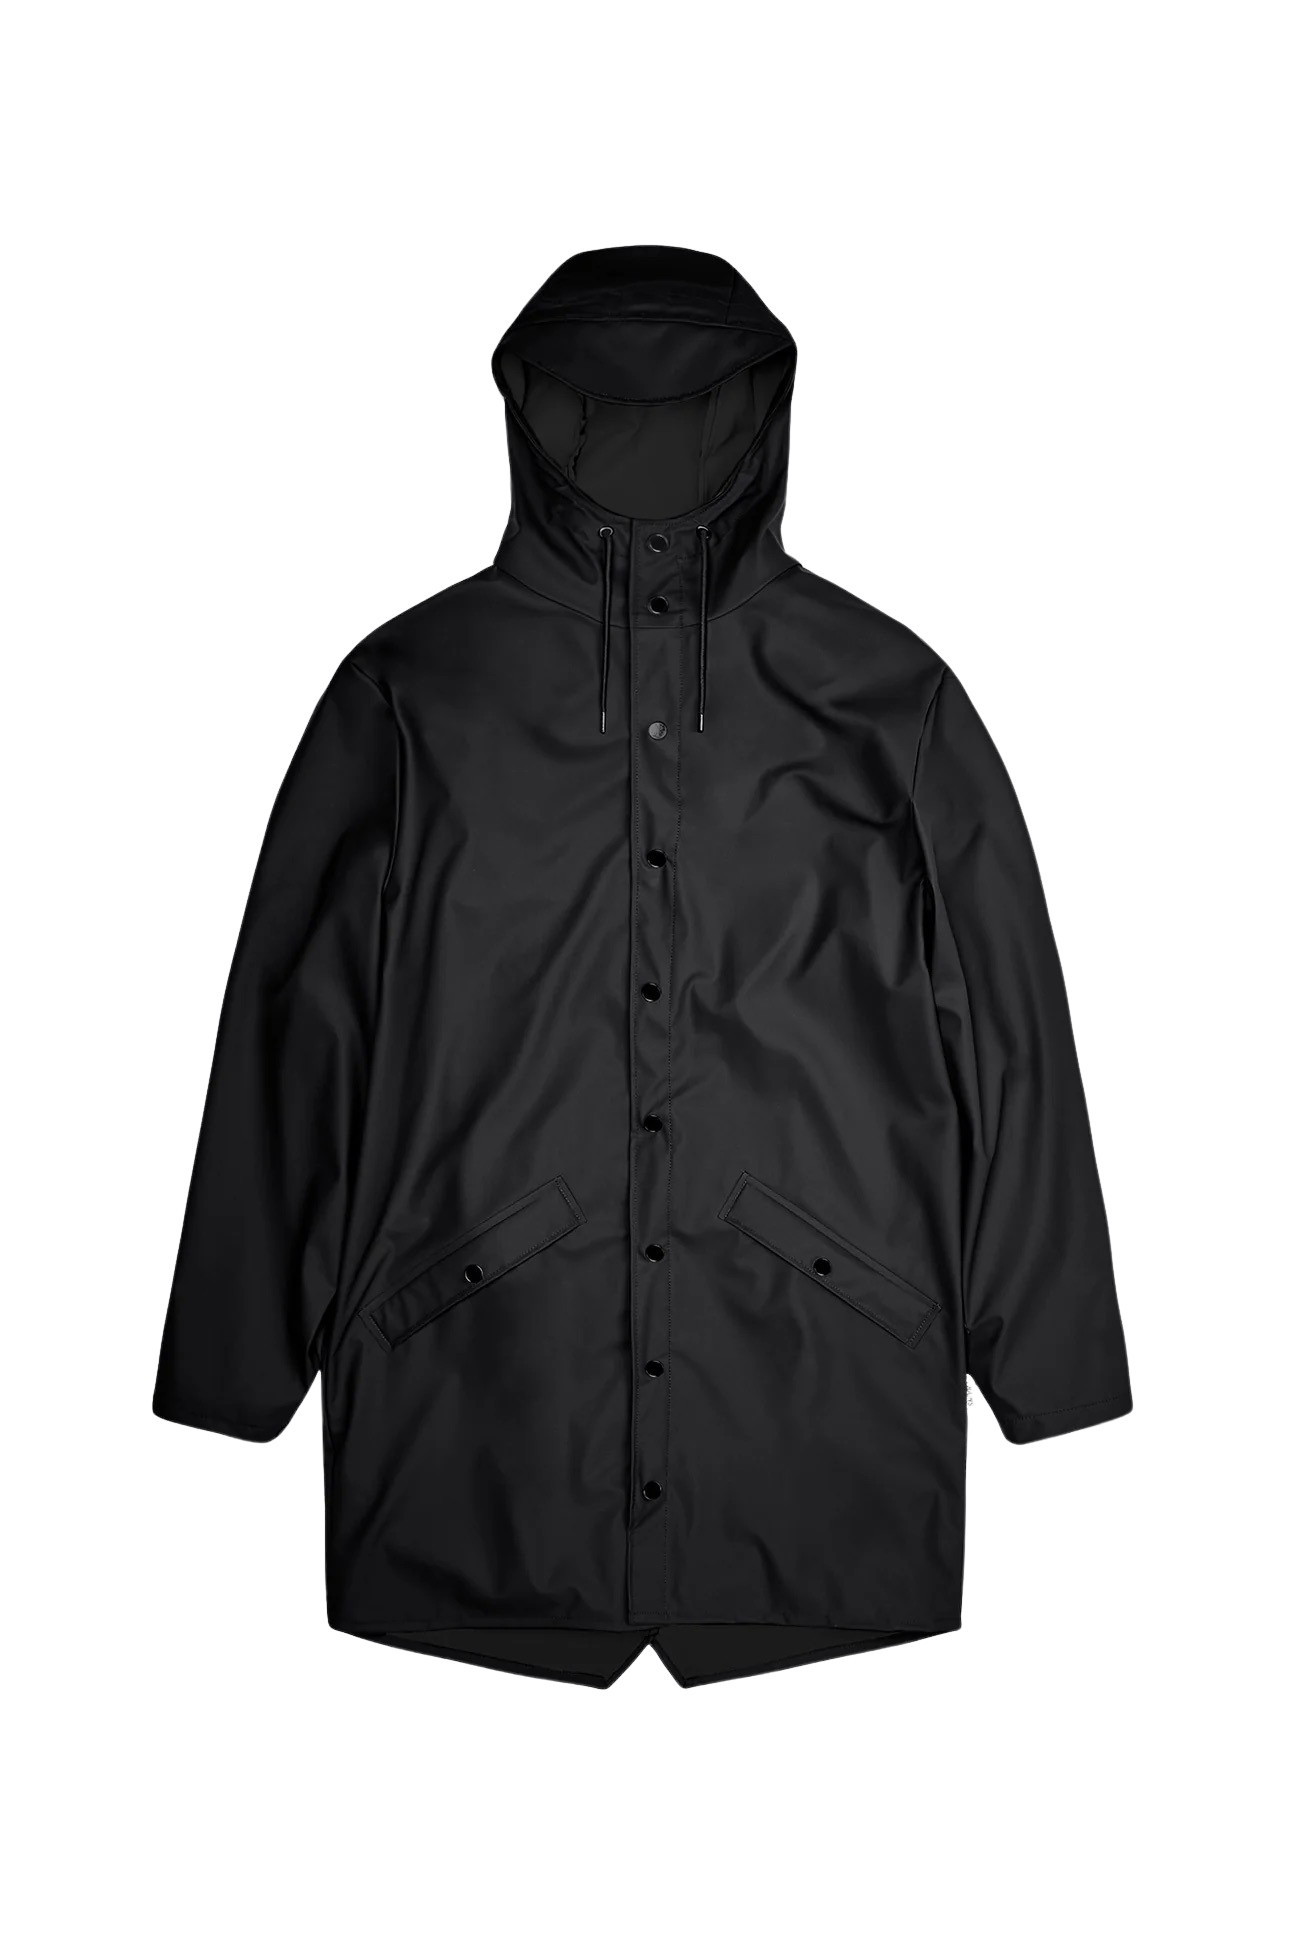 long_jacket-jackets-12020-01_black-9